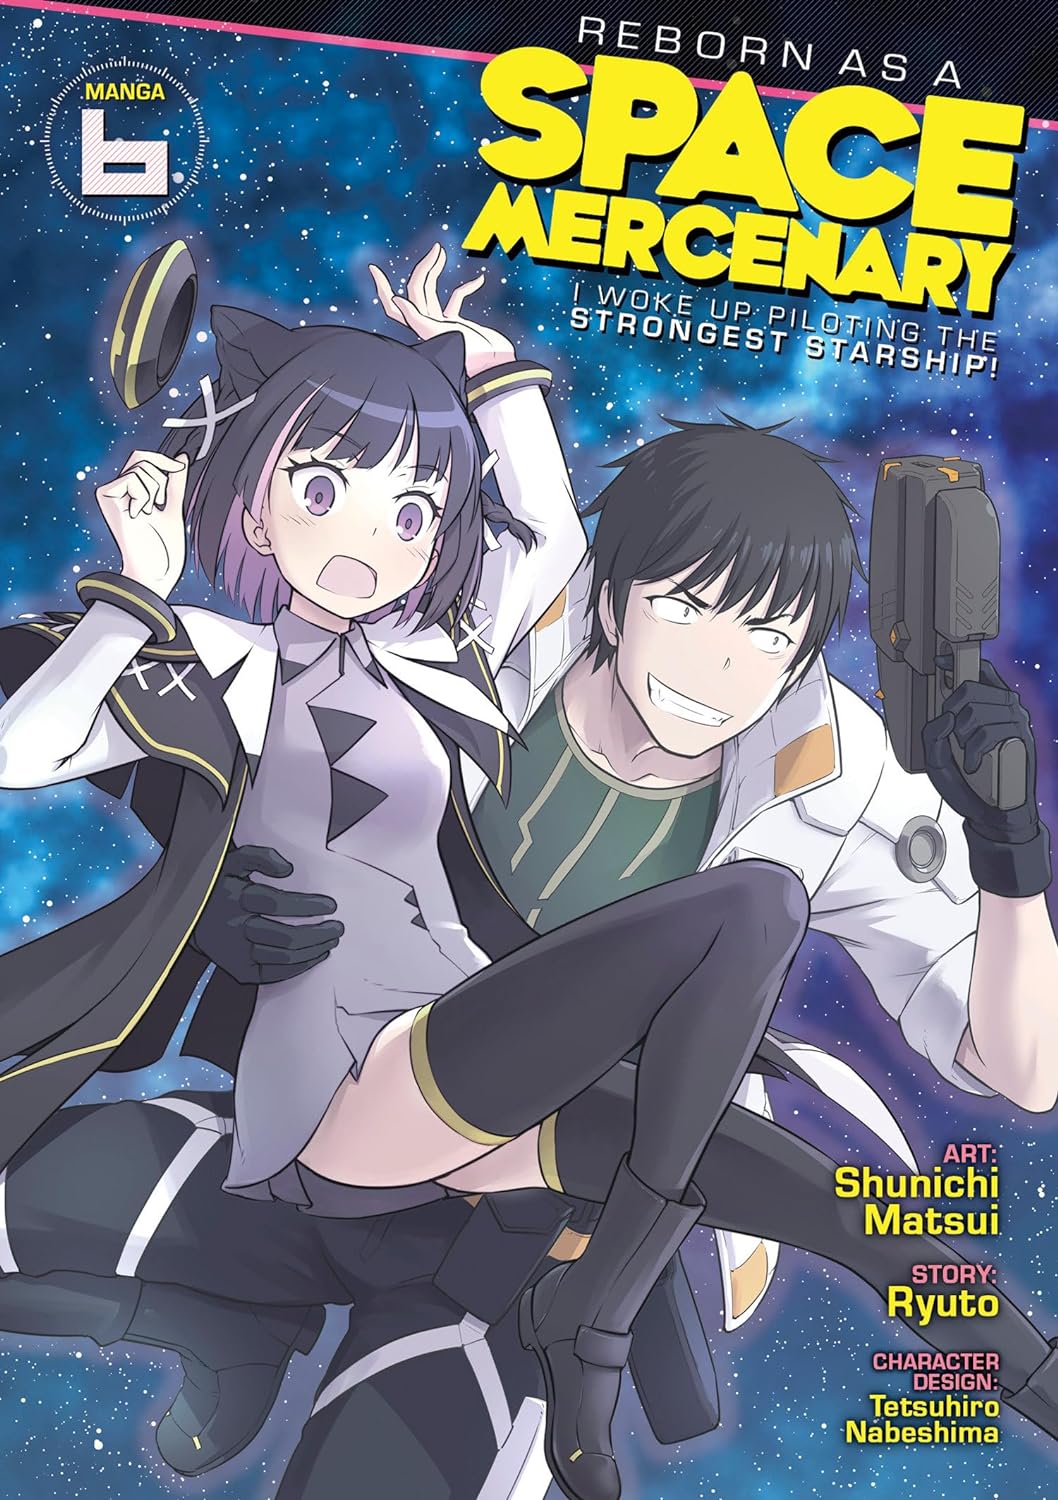 Reborn as a Space Mercenary: I Woke Up Piloting the Strongest Starship! (Manga) Vol. 06